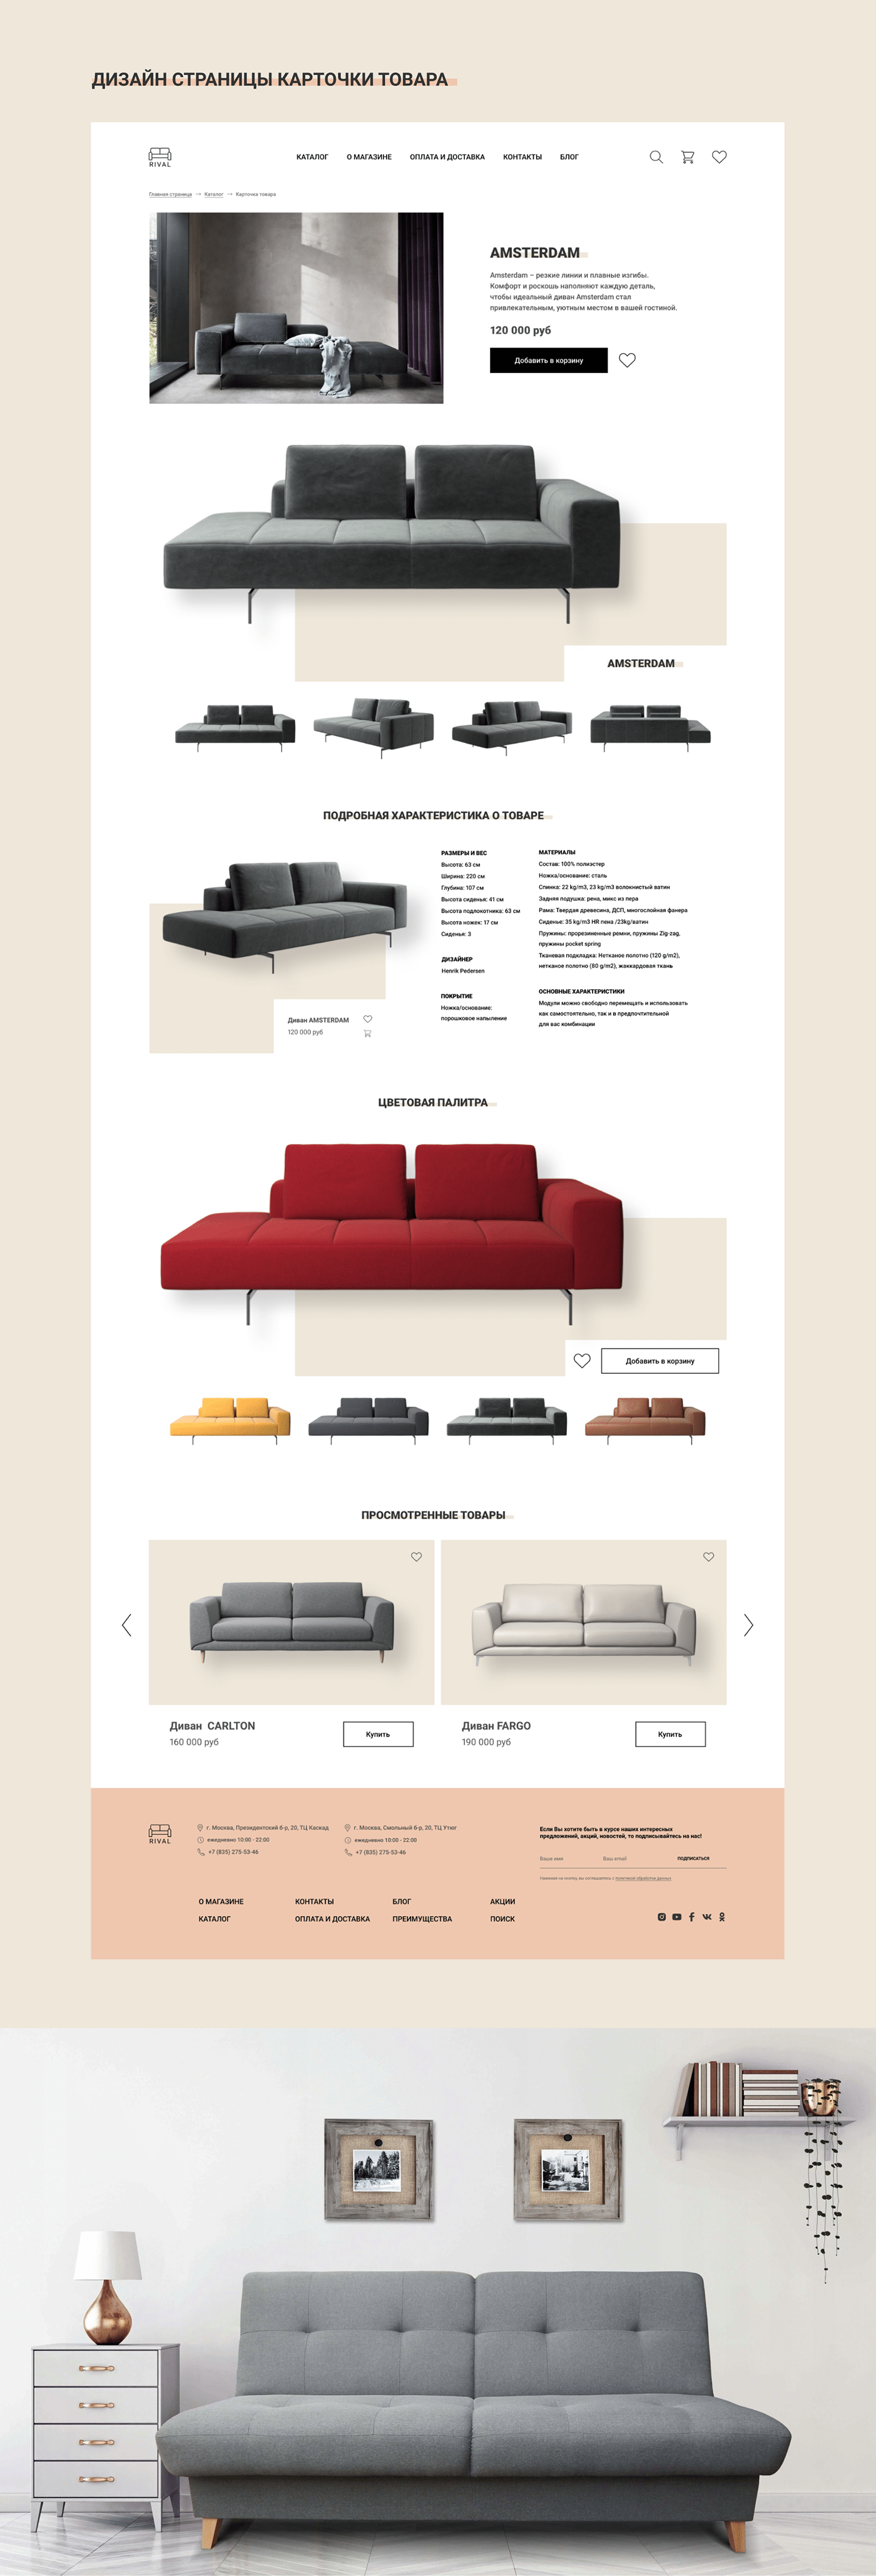 chair Couch divan furniture furniturebail furnitureporn ottoman settee sofa sofas